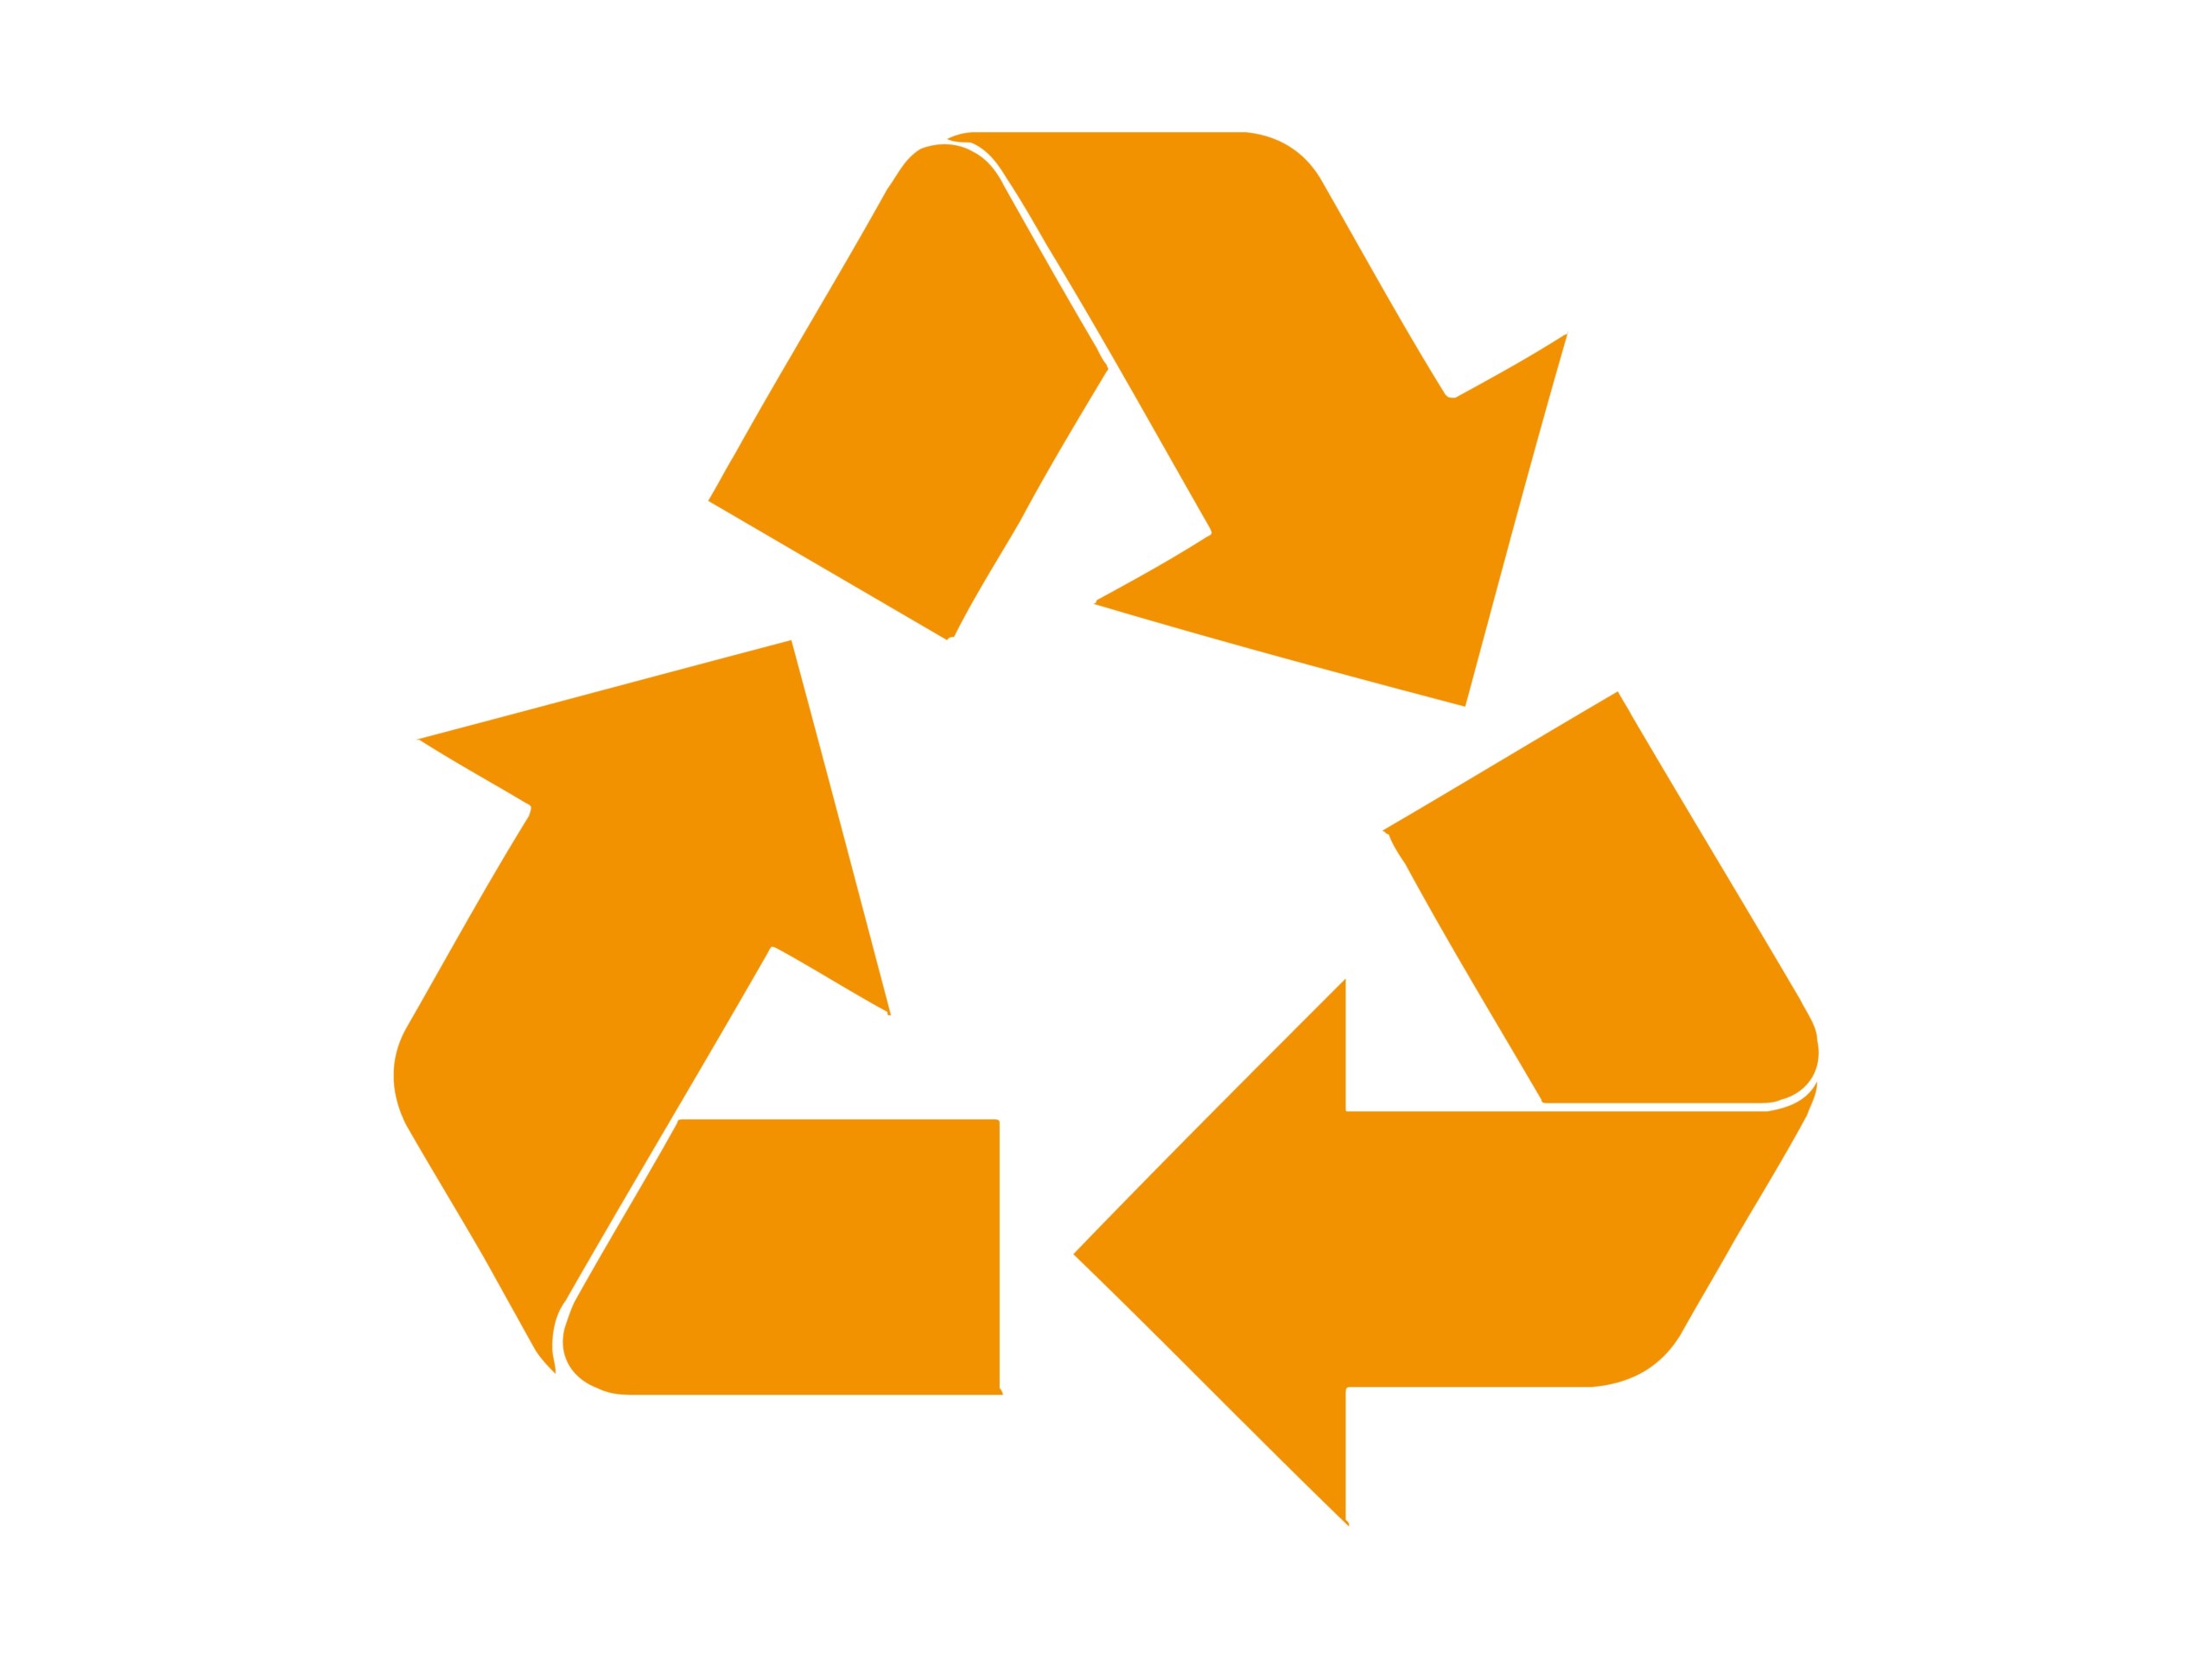 revecta hilft beim recyceln